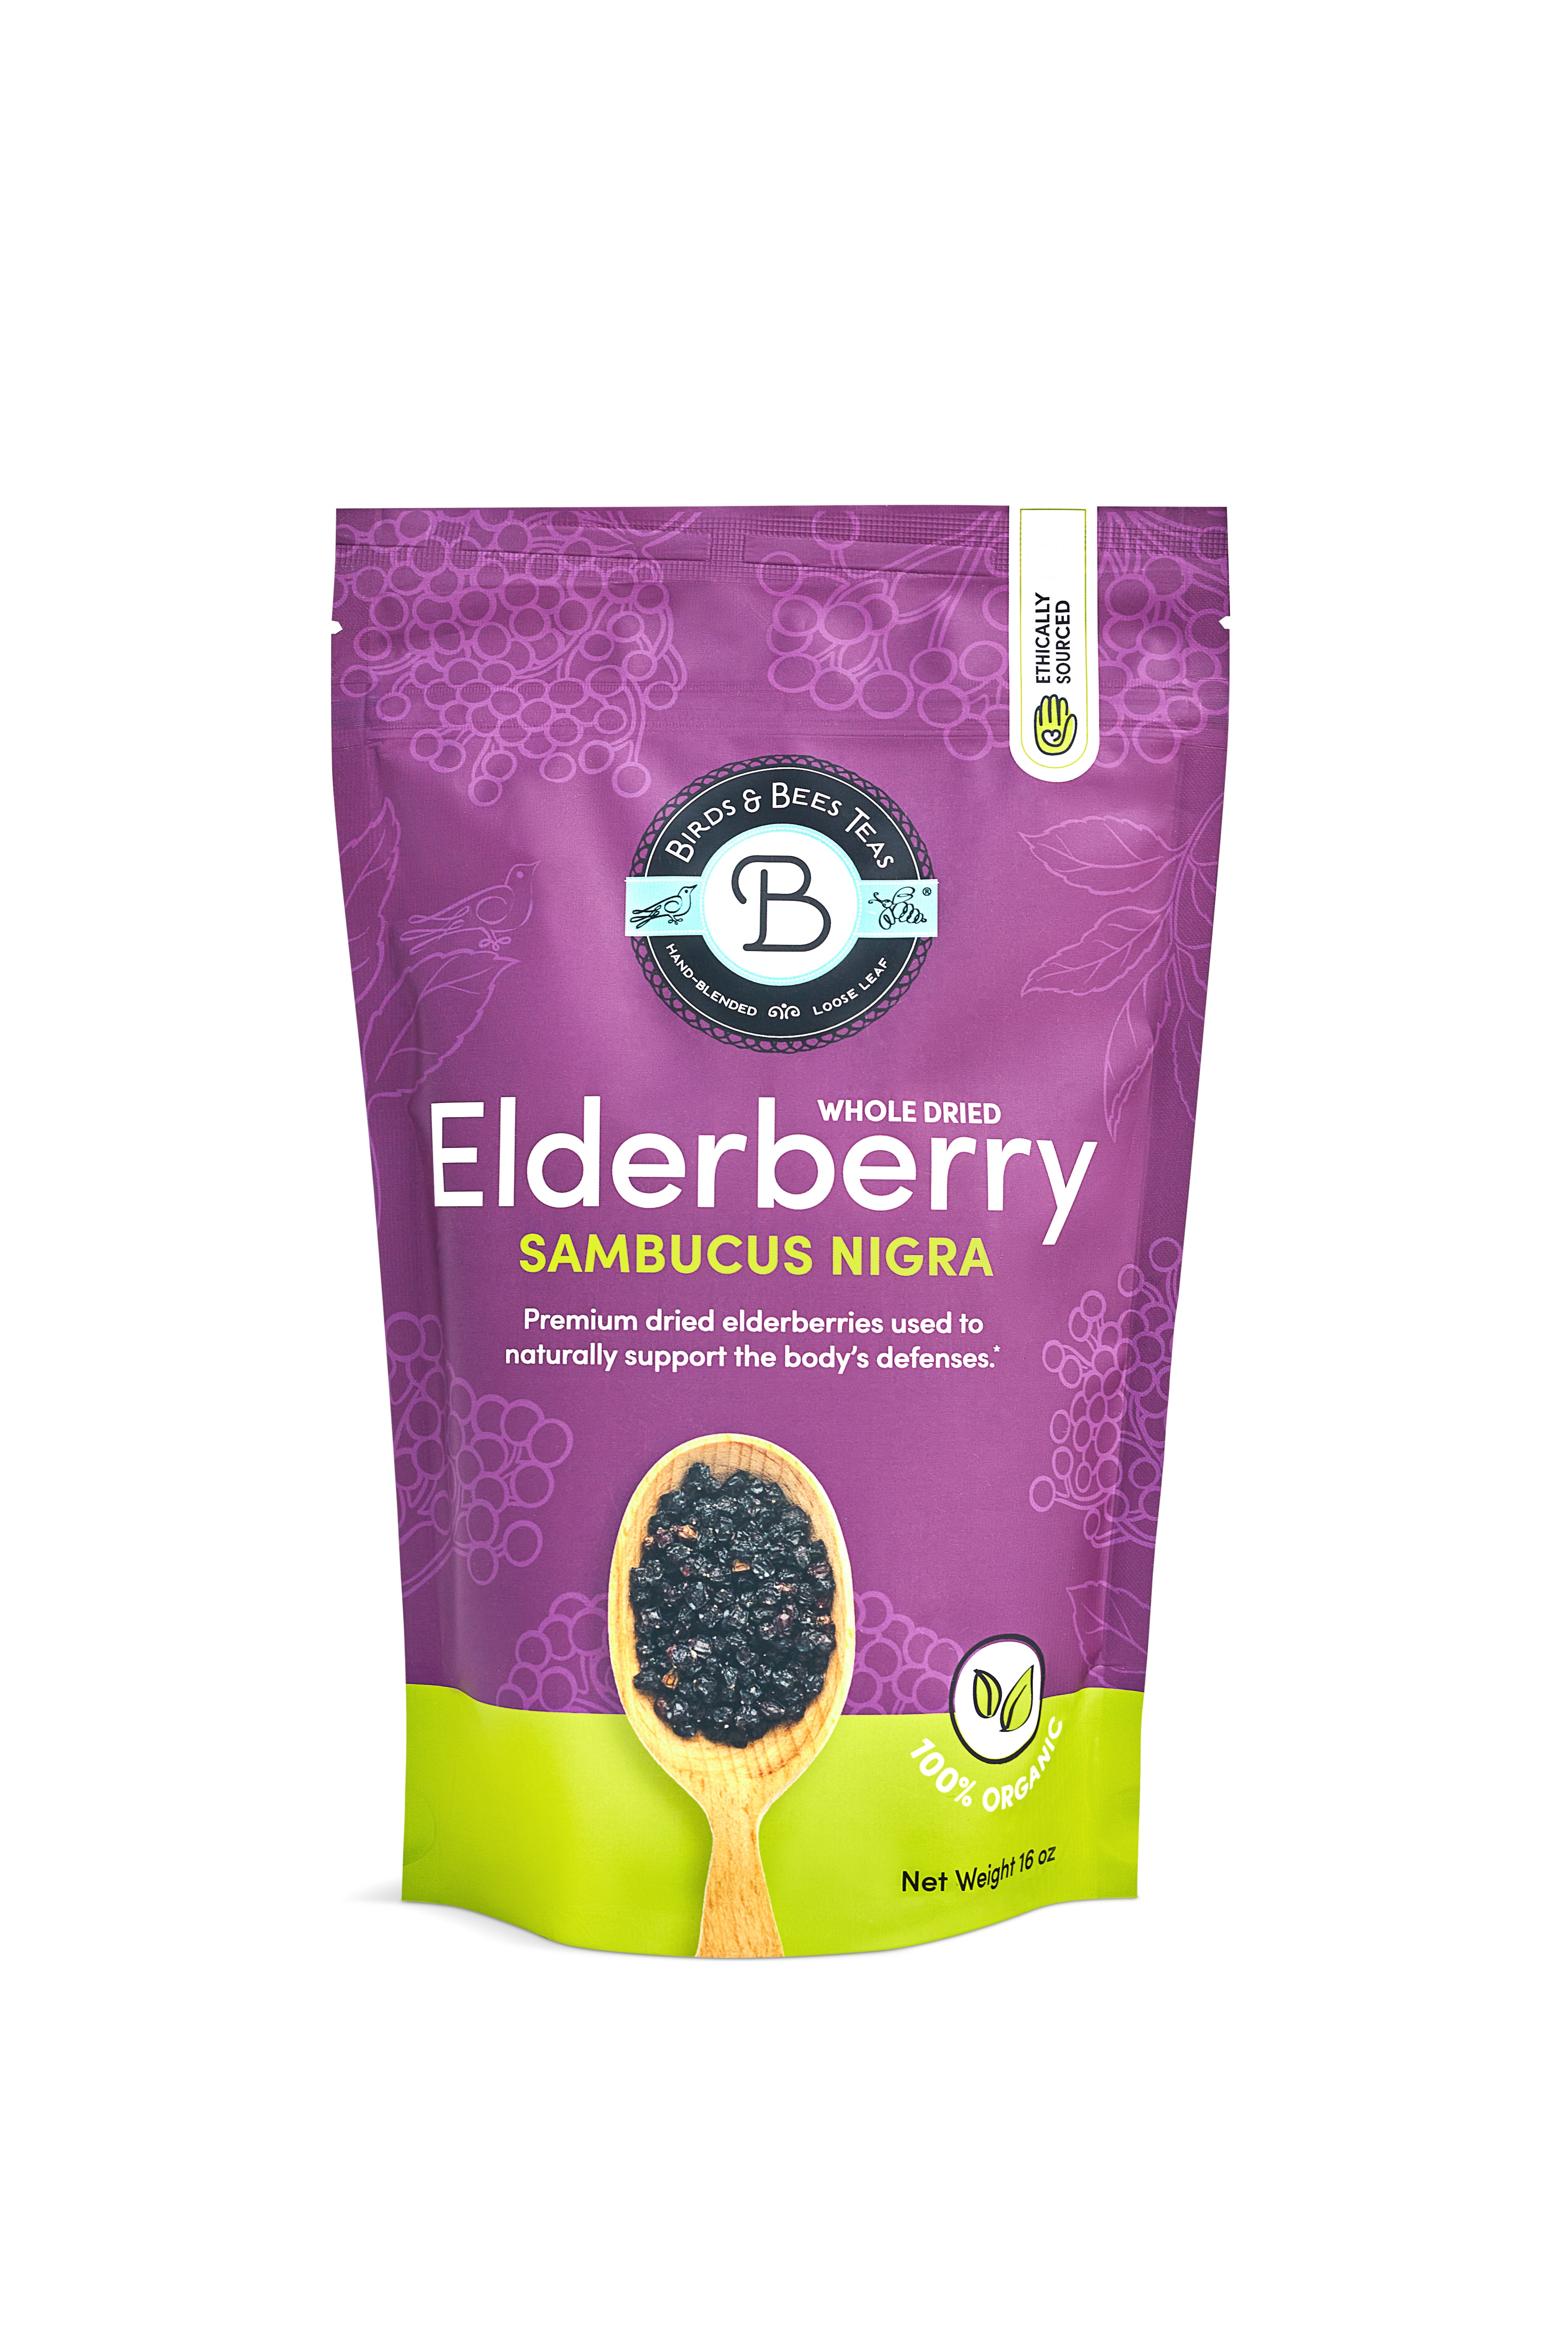 Elderberry Tea Organic - Bulk Elderberry - Whole Dried Organic Elderberries